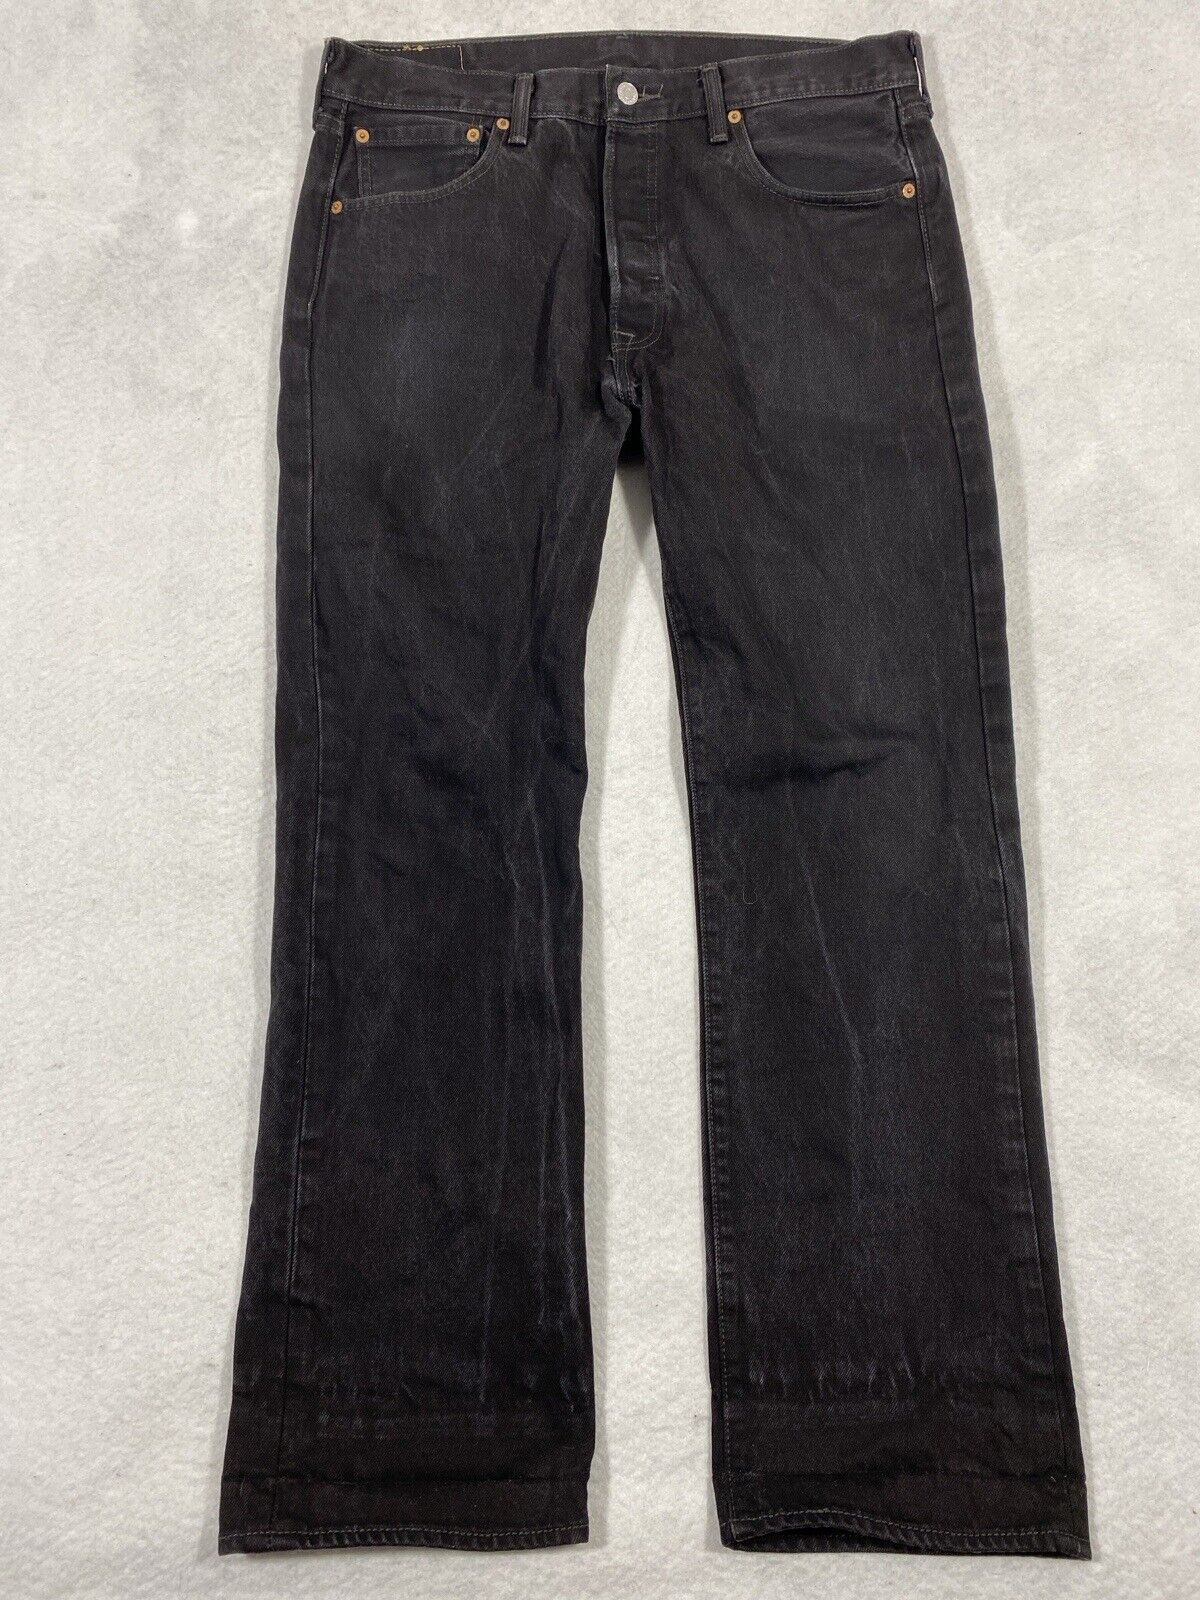 Levi’s 501 Button Fly Jeans Men’s Size 34x30 Black Denim Straight Leg